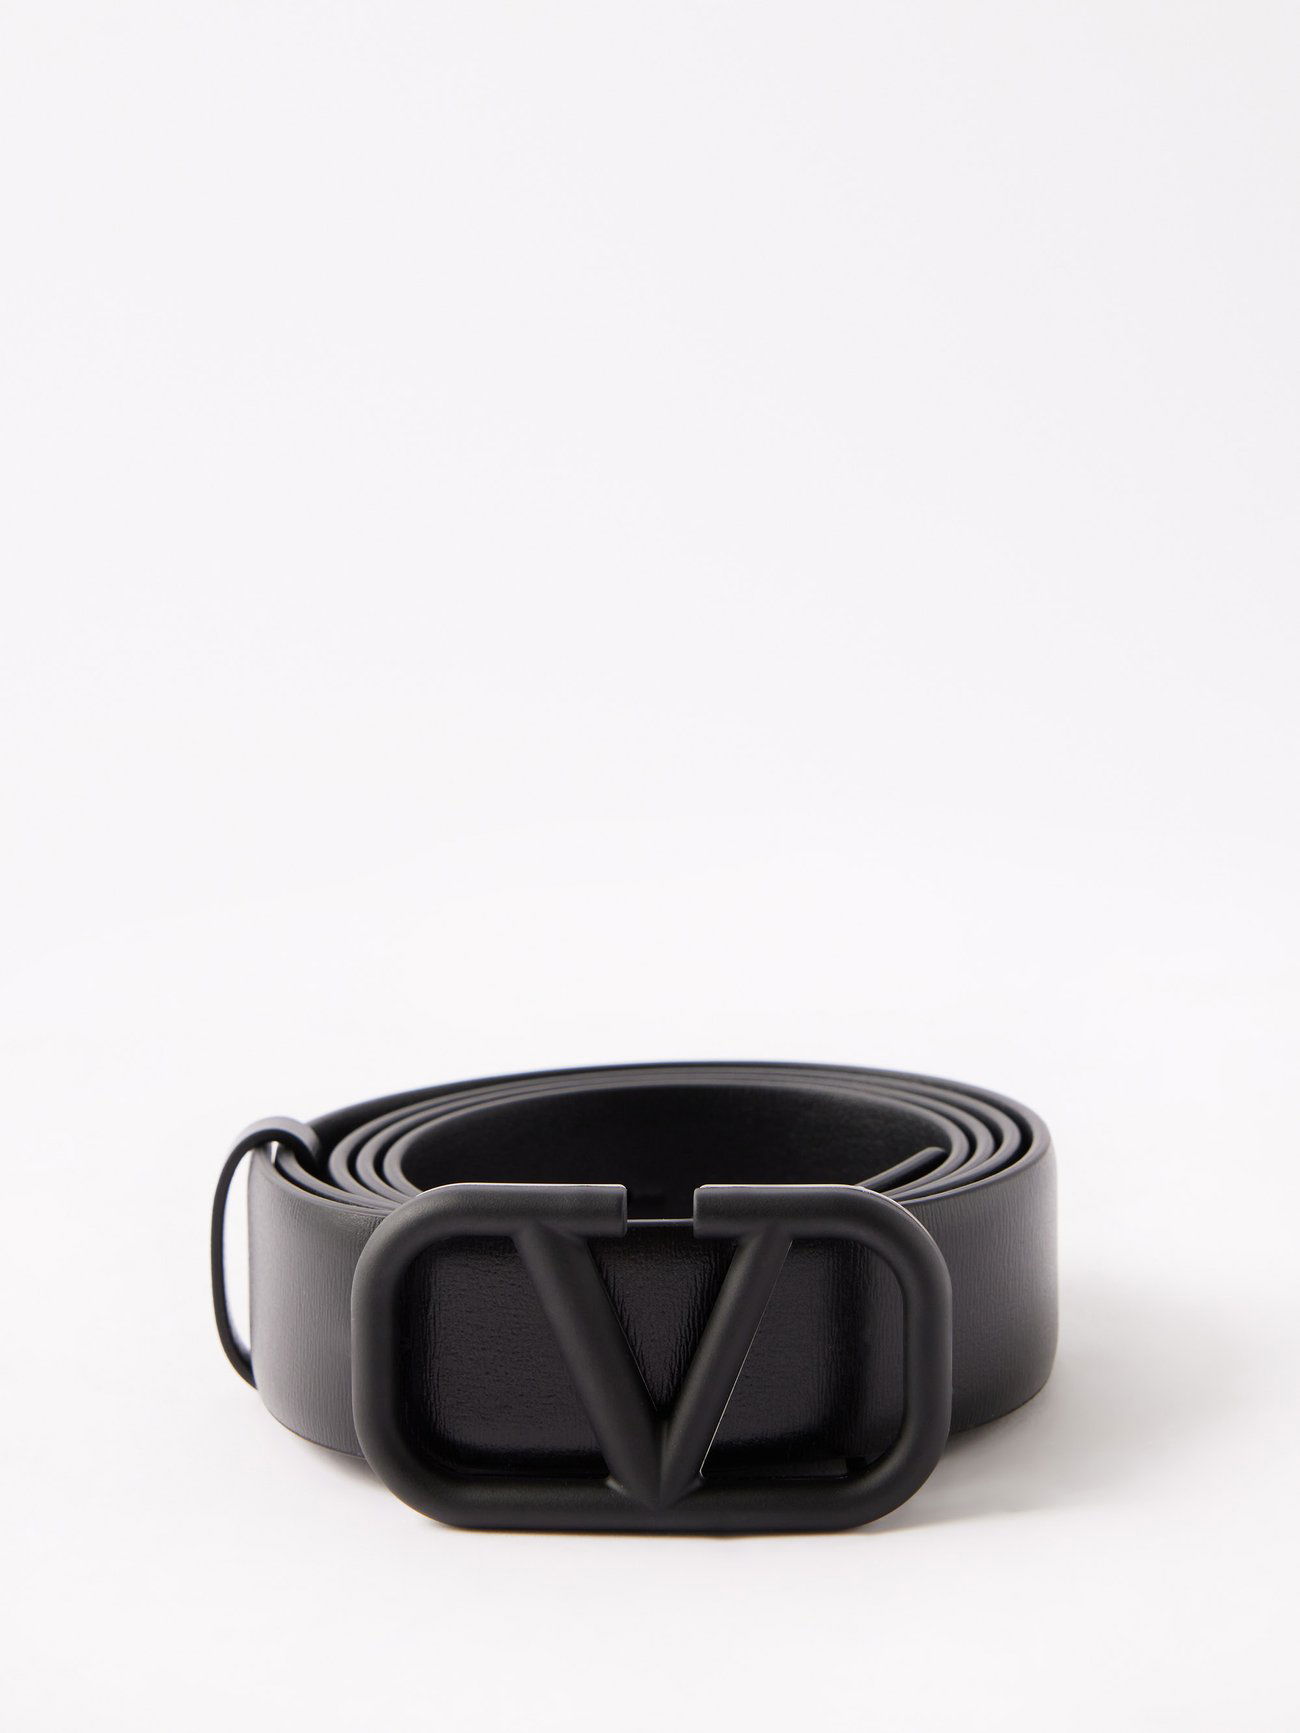 Valentino Garavani 30mm Leather Belt W/ V Logo Buckle In Selleria